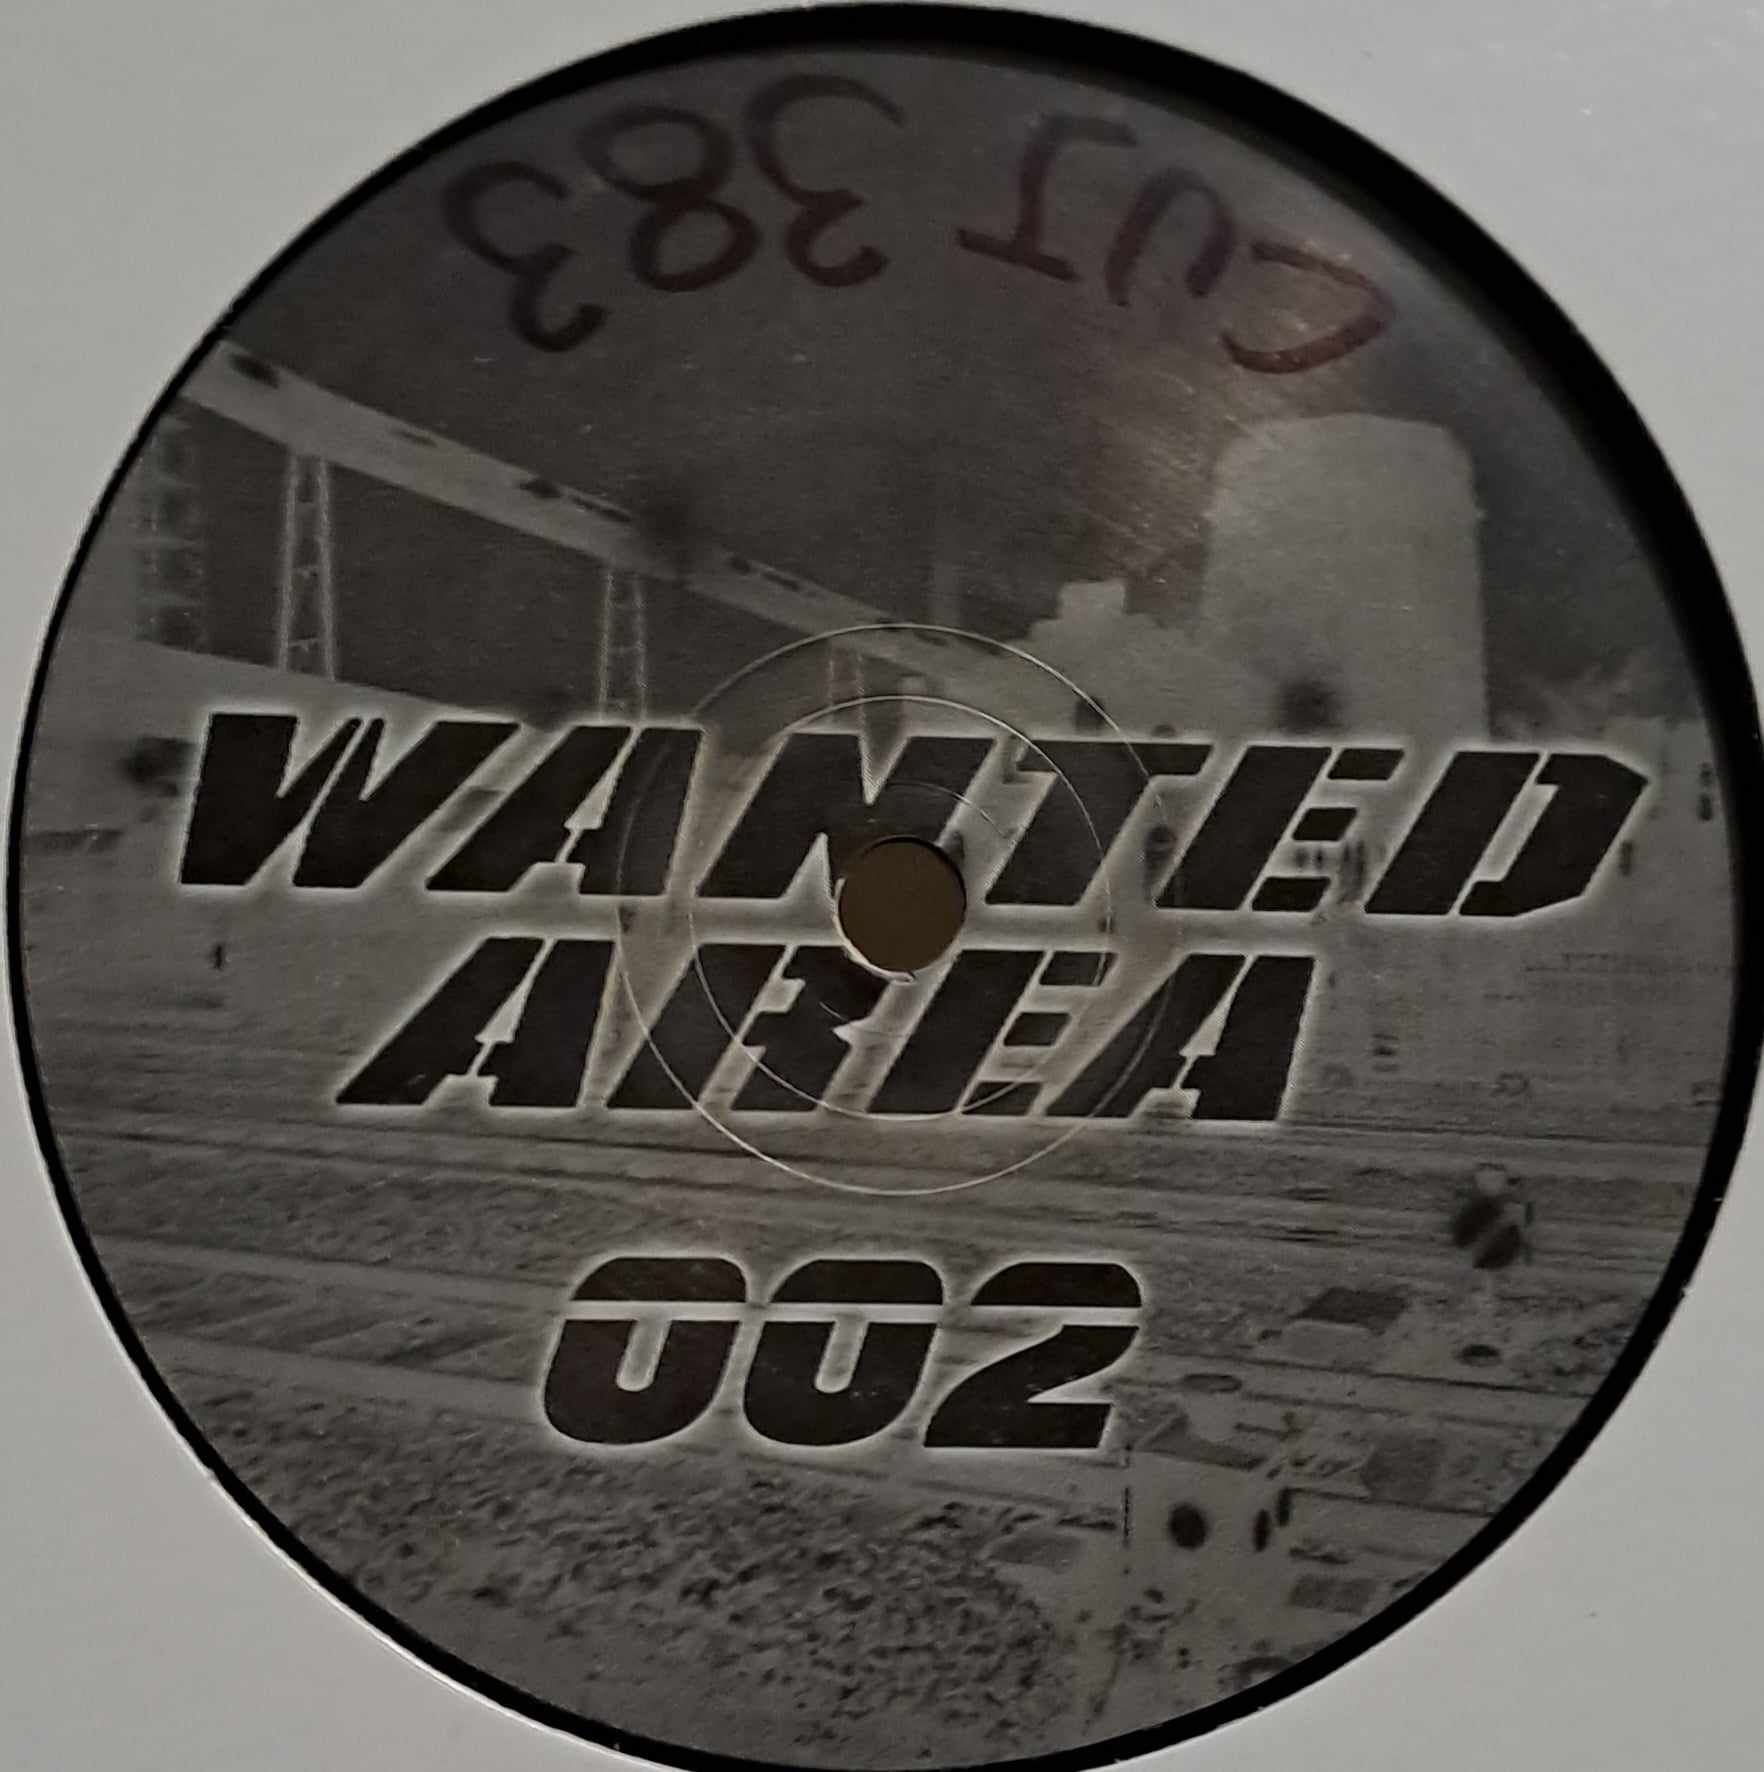 Wanted Area 002 - vinyle freetekno